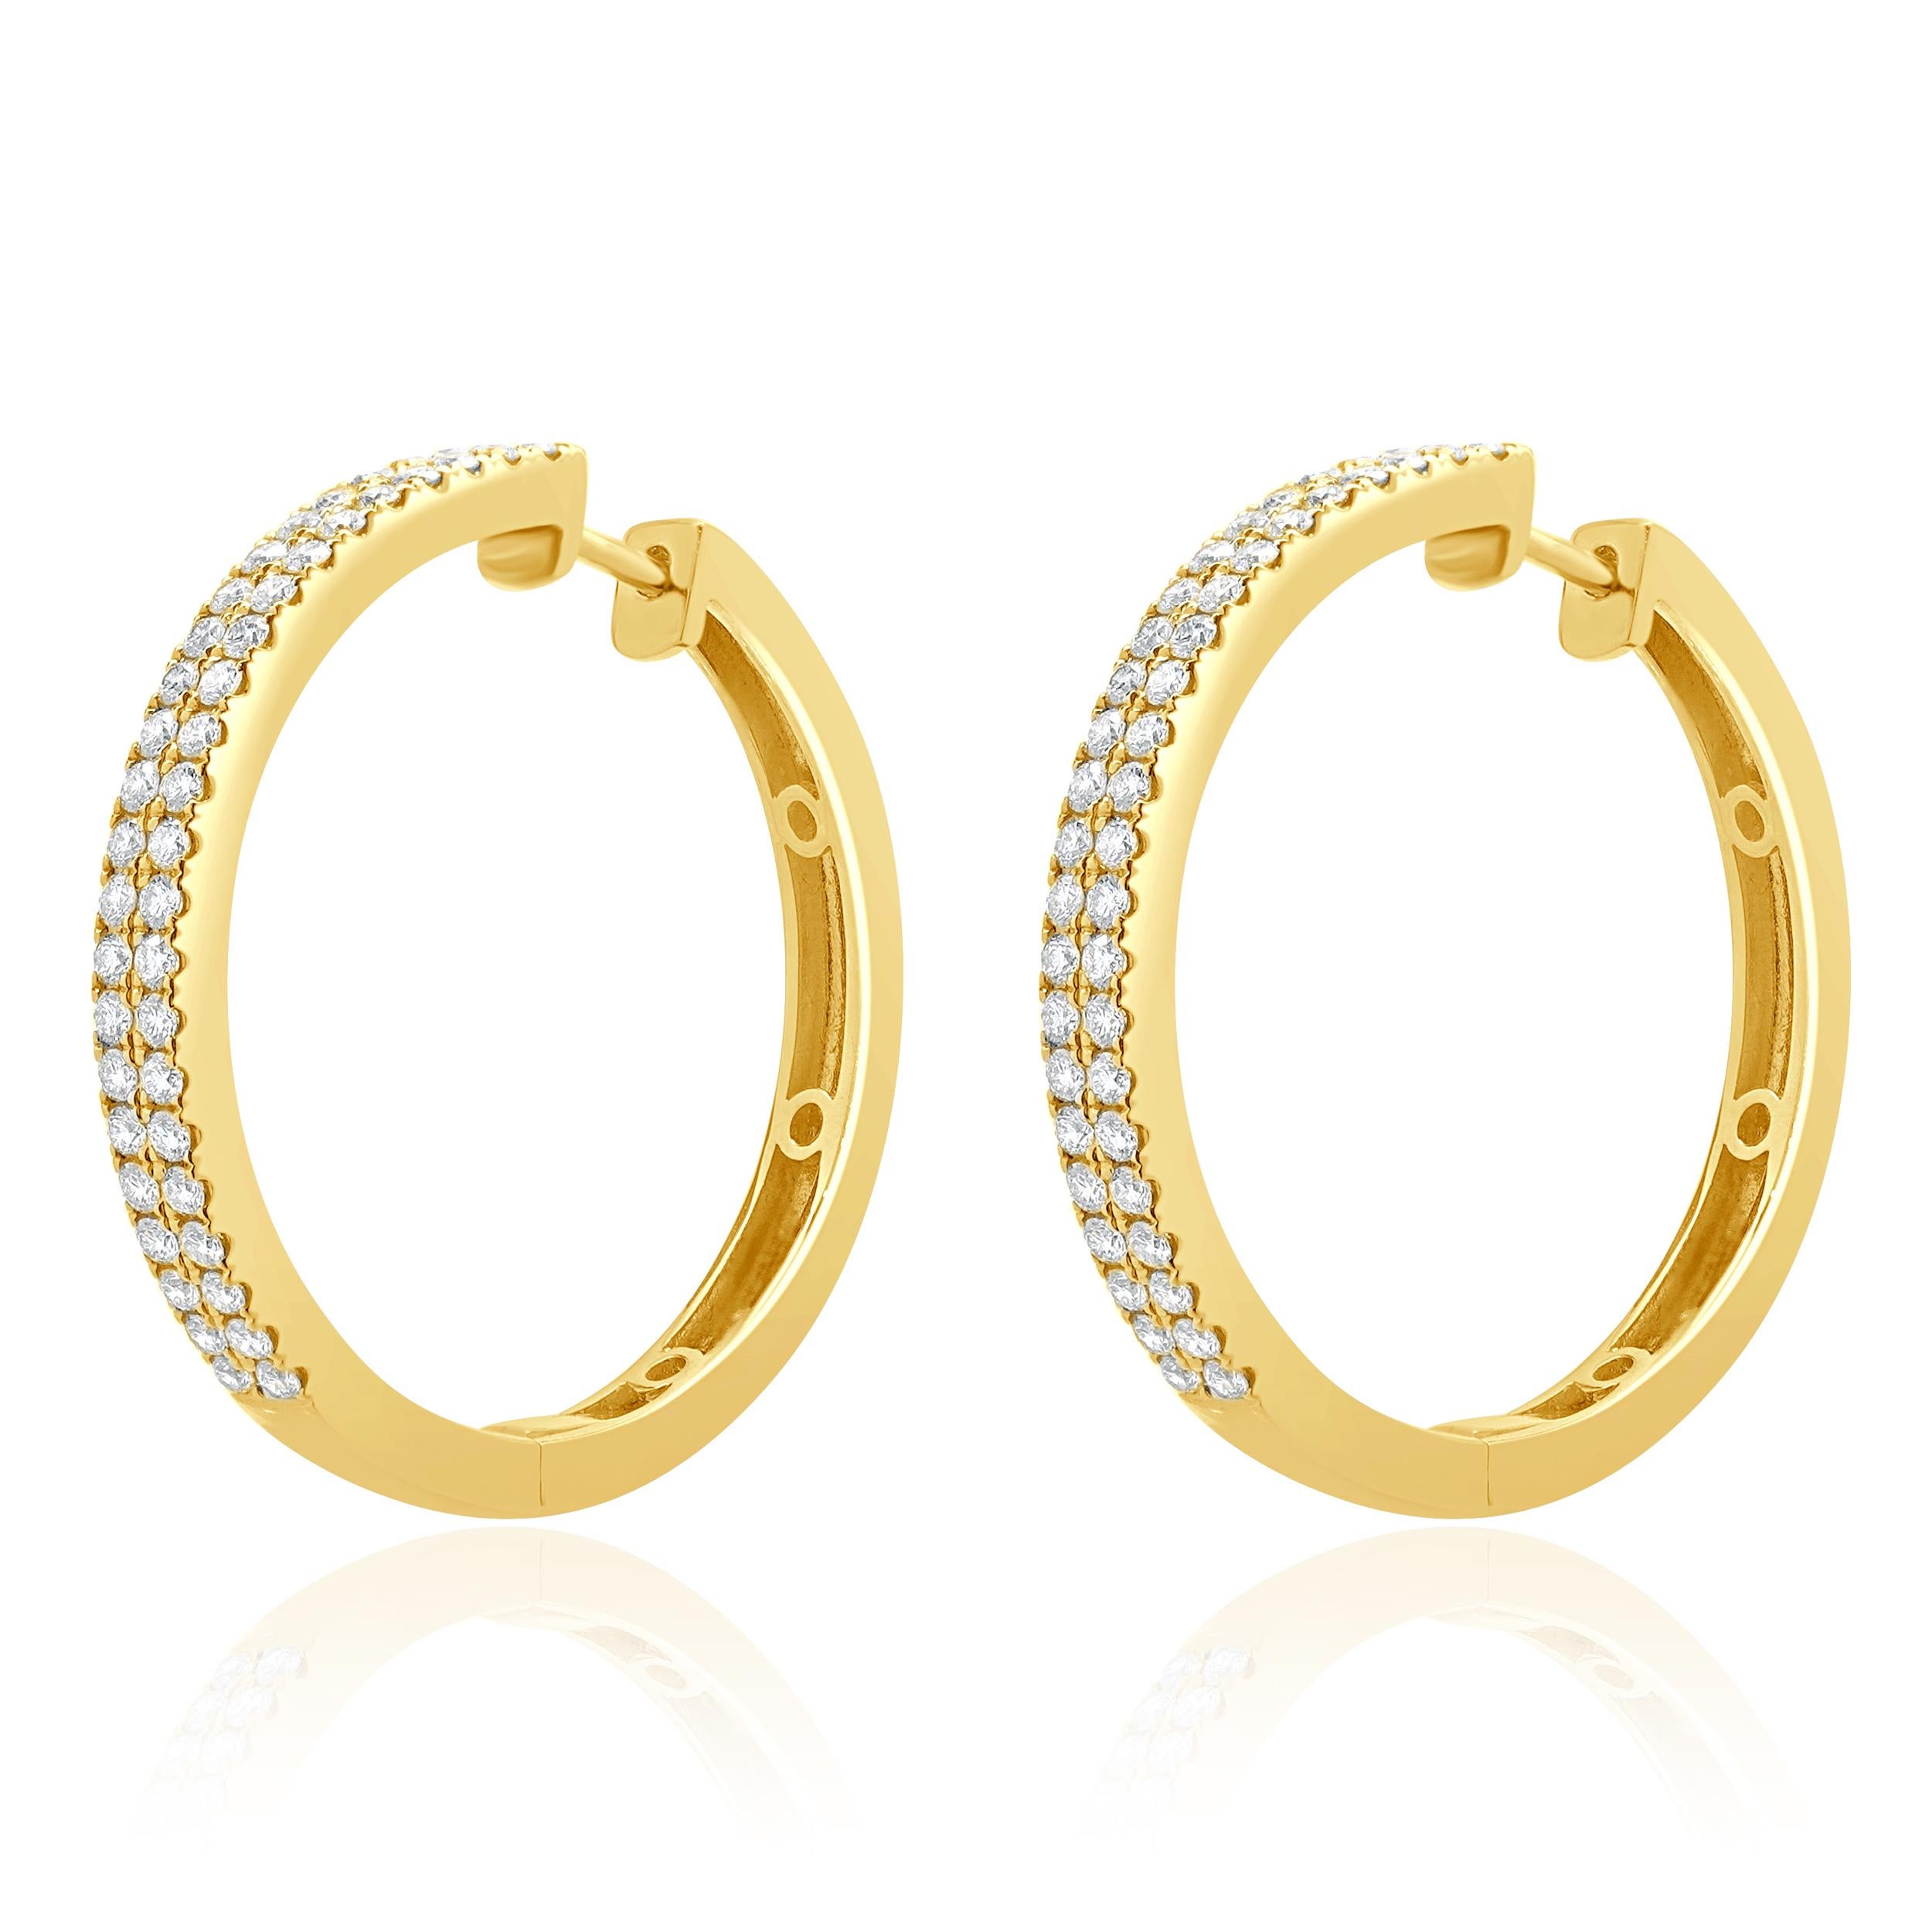 Designer: custom design
Material: 14K yellow gold
Diamonds: 92 round brilliant cut= 1.18cttw
Color: G/H
Clarity: VS-SI1
Dimensions: earrings measure 30mm 
Weight: 10.60 grams
